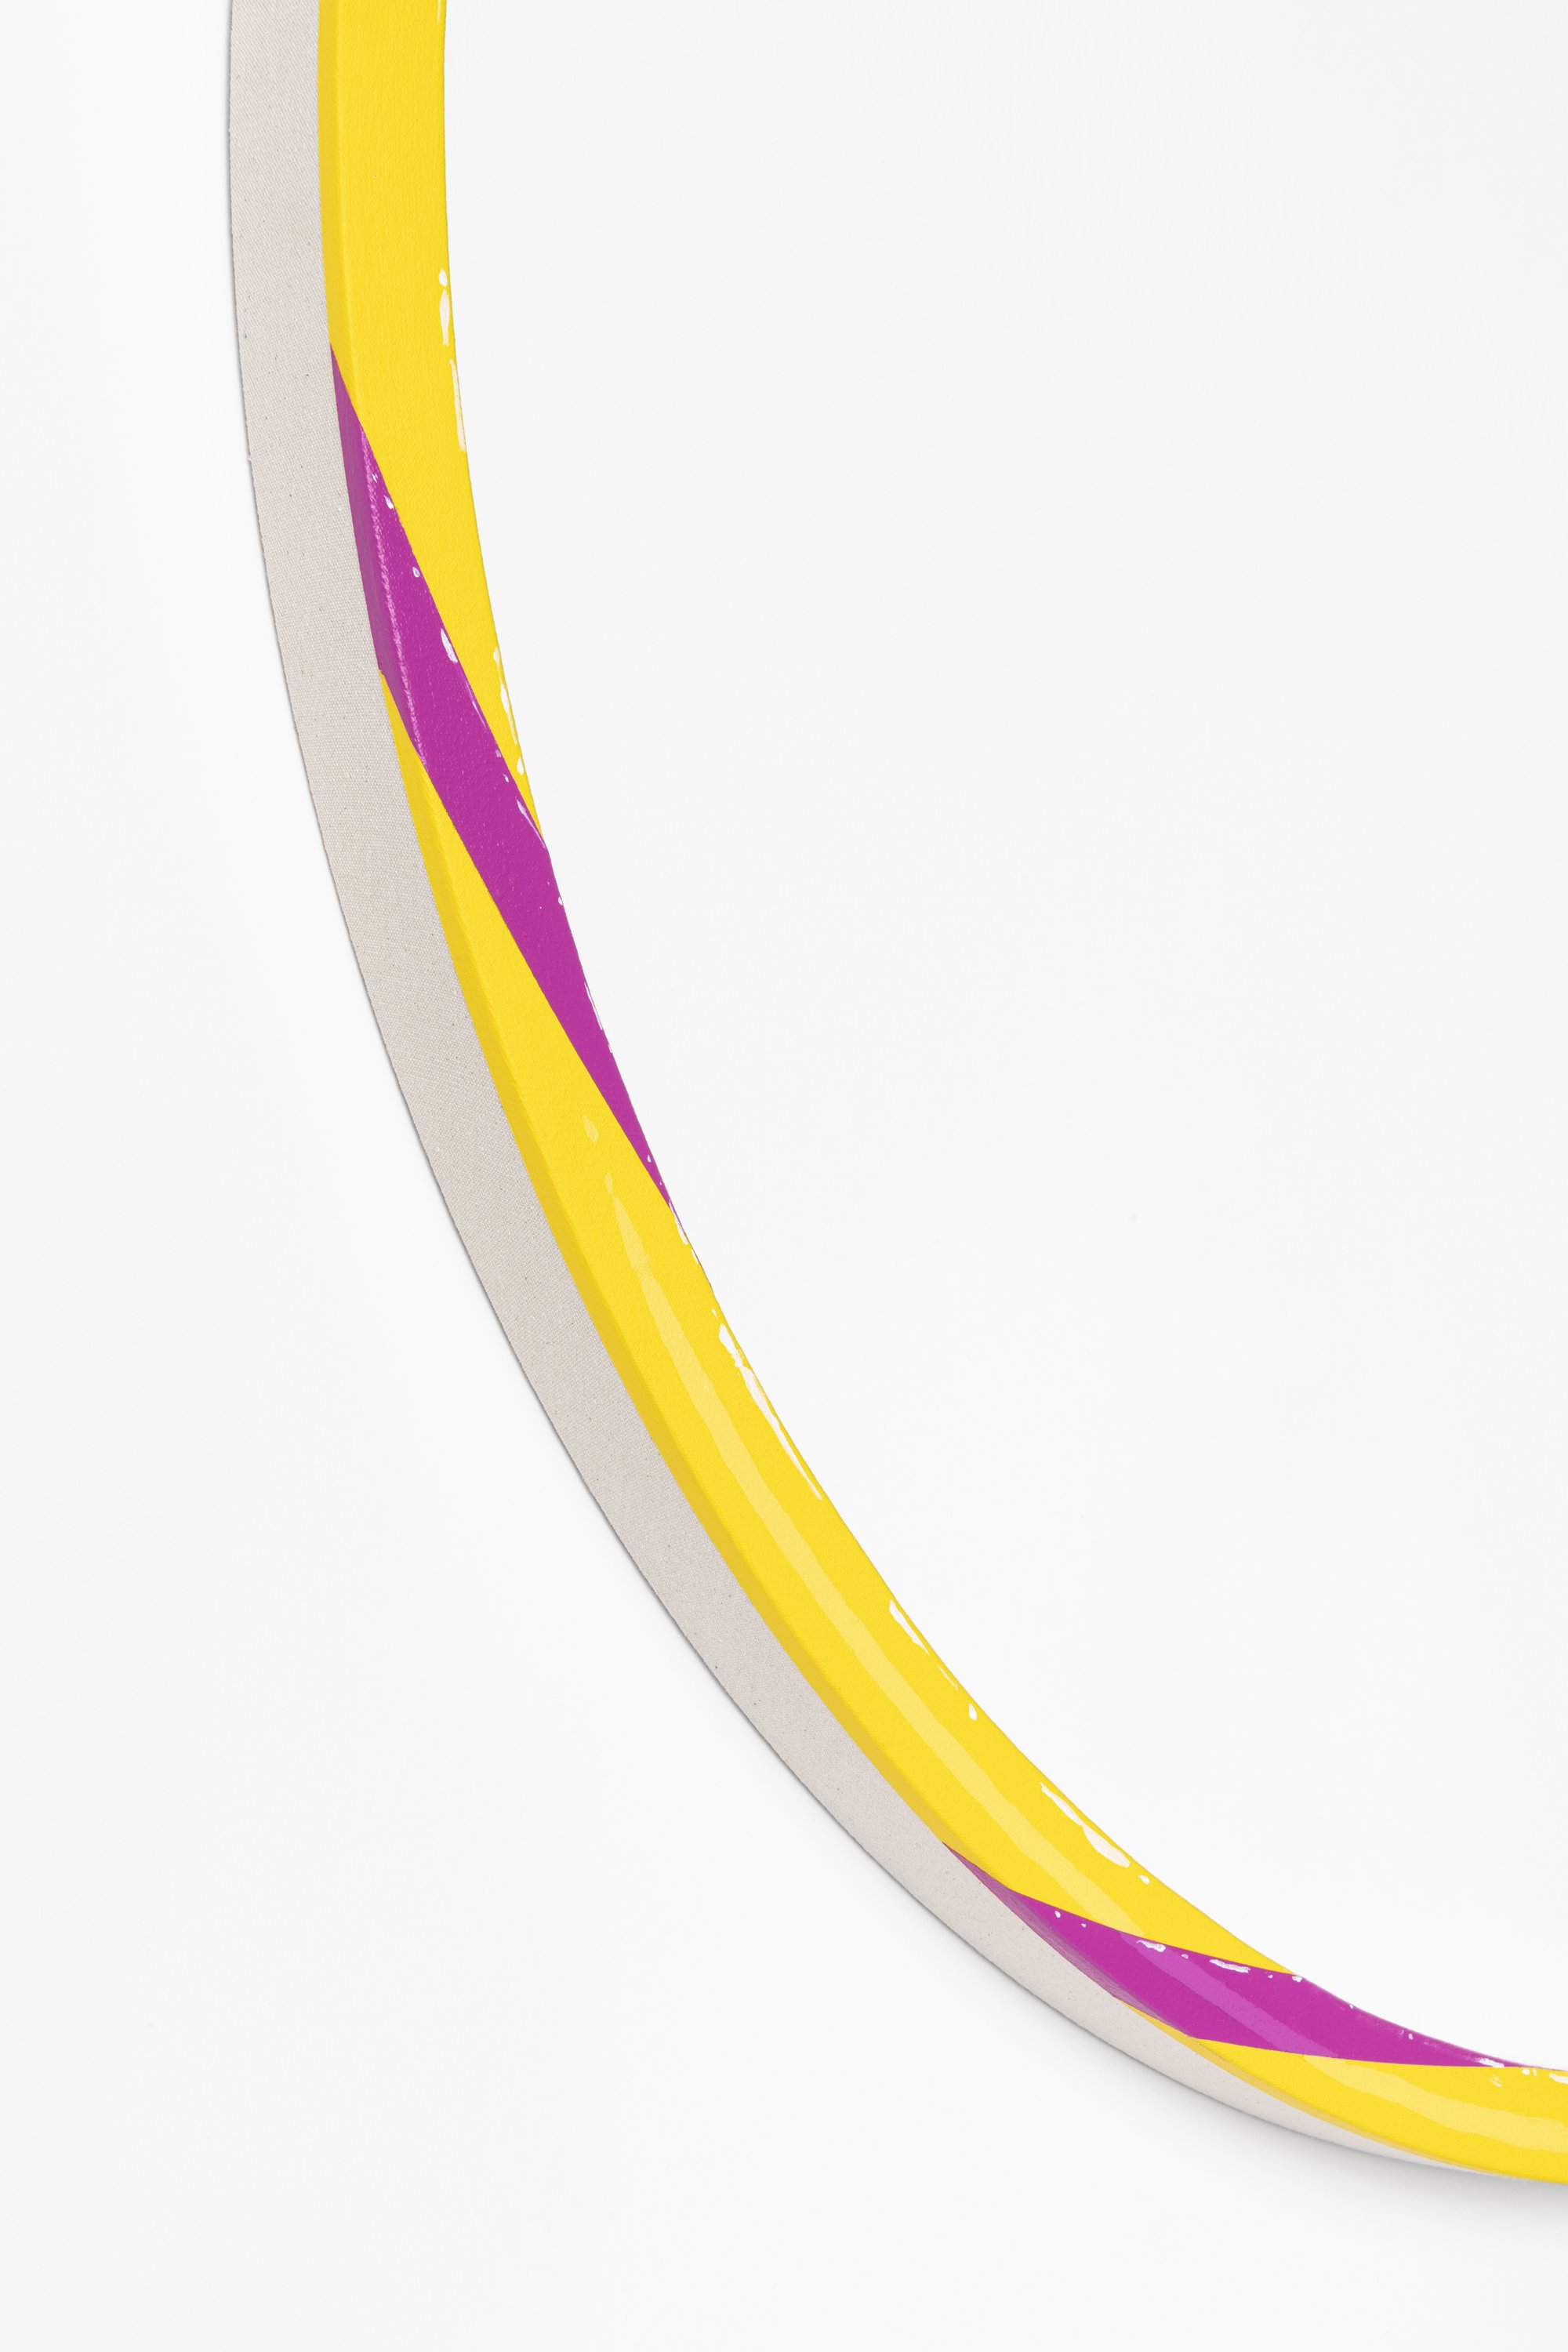 Hula Hoop (yellow/magenta)